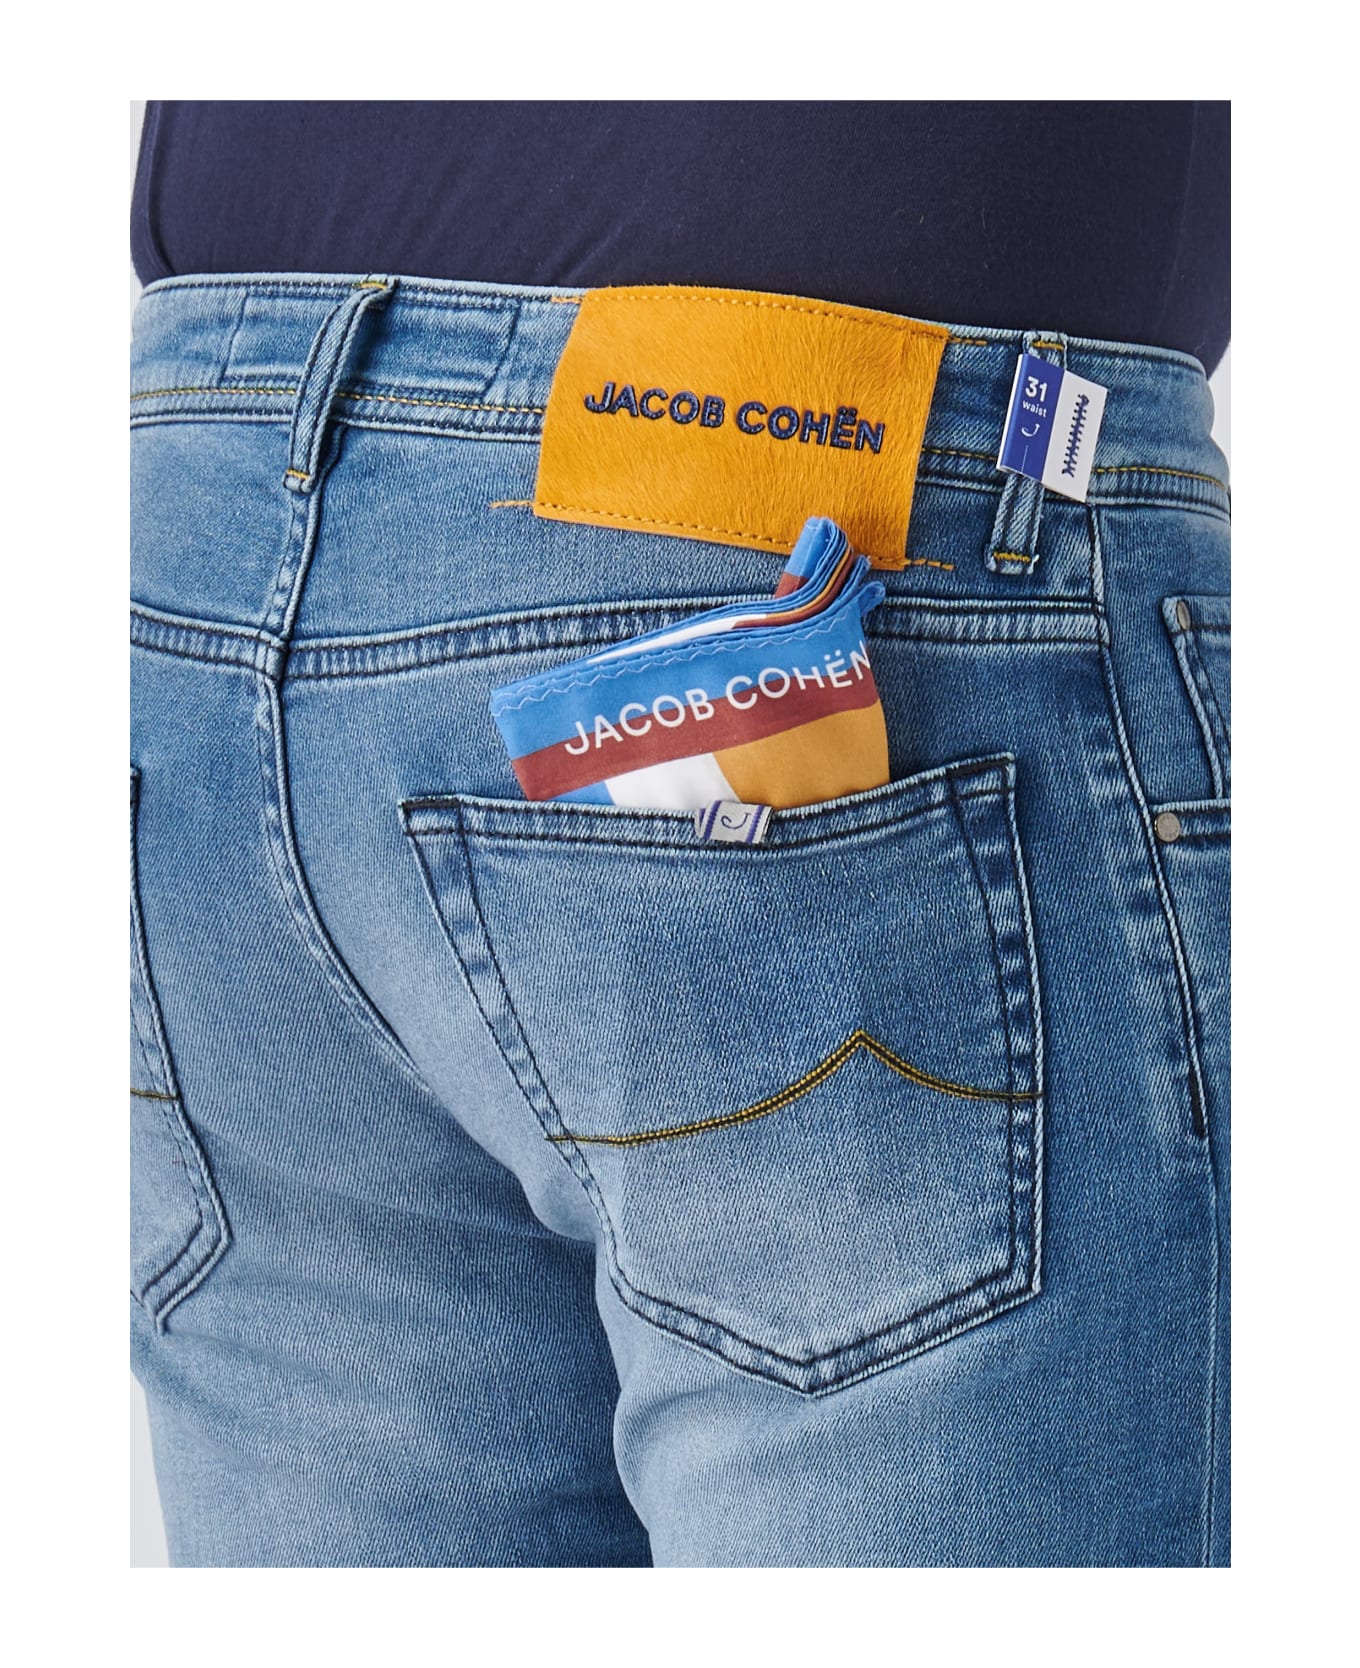 Jacob Cohen Pantalone Super Slim Nick Trousers - DENIM CHIARO ボトムス